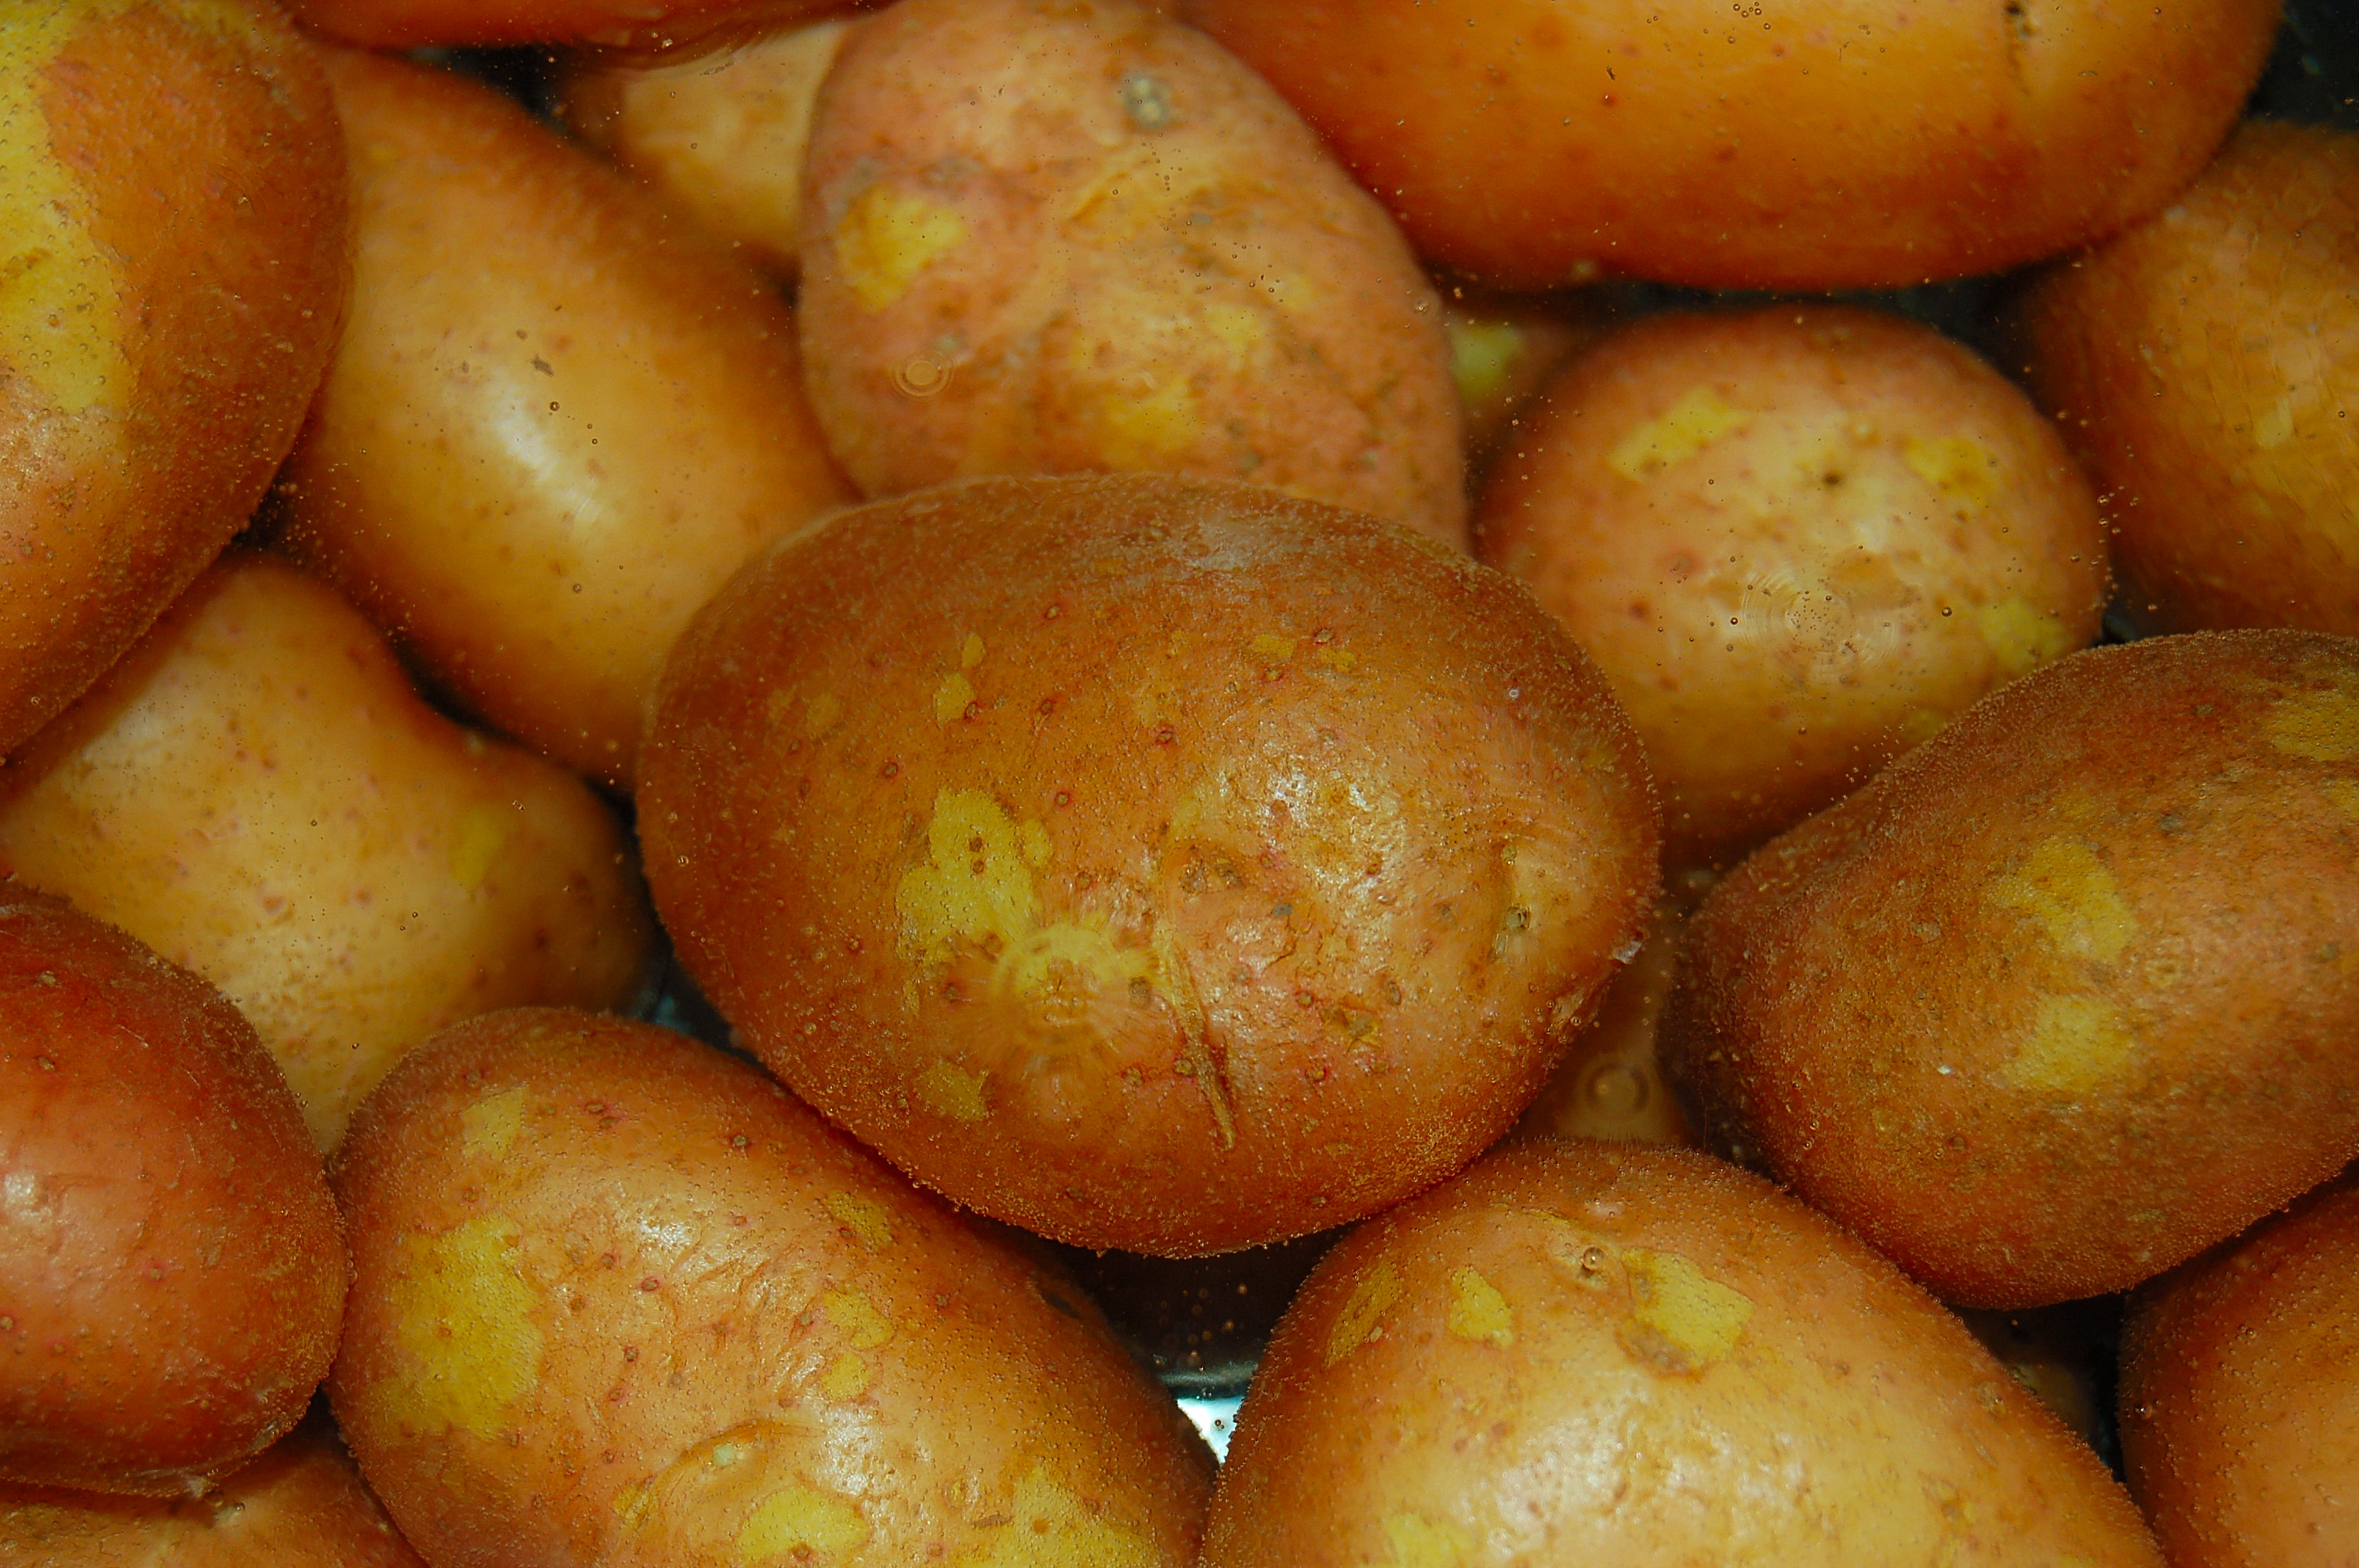 Potatoes - the source of biodegradable plastics of the future